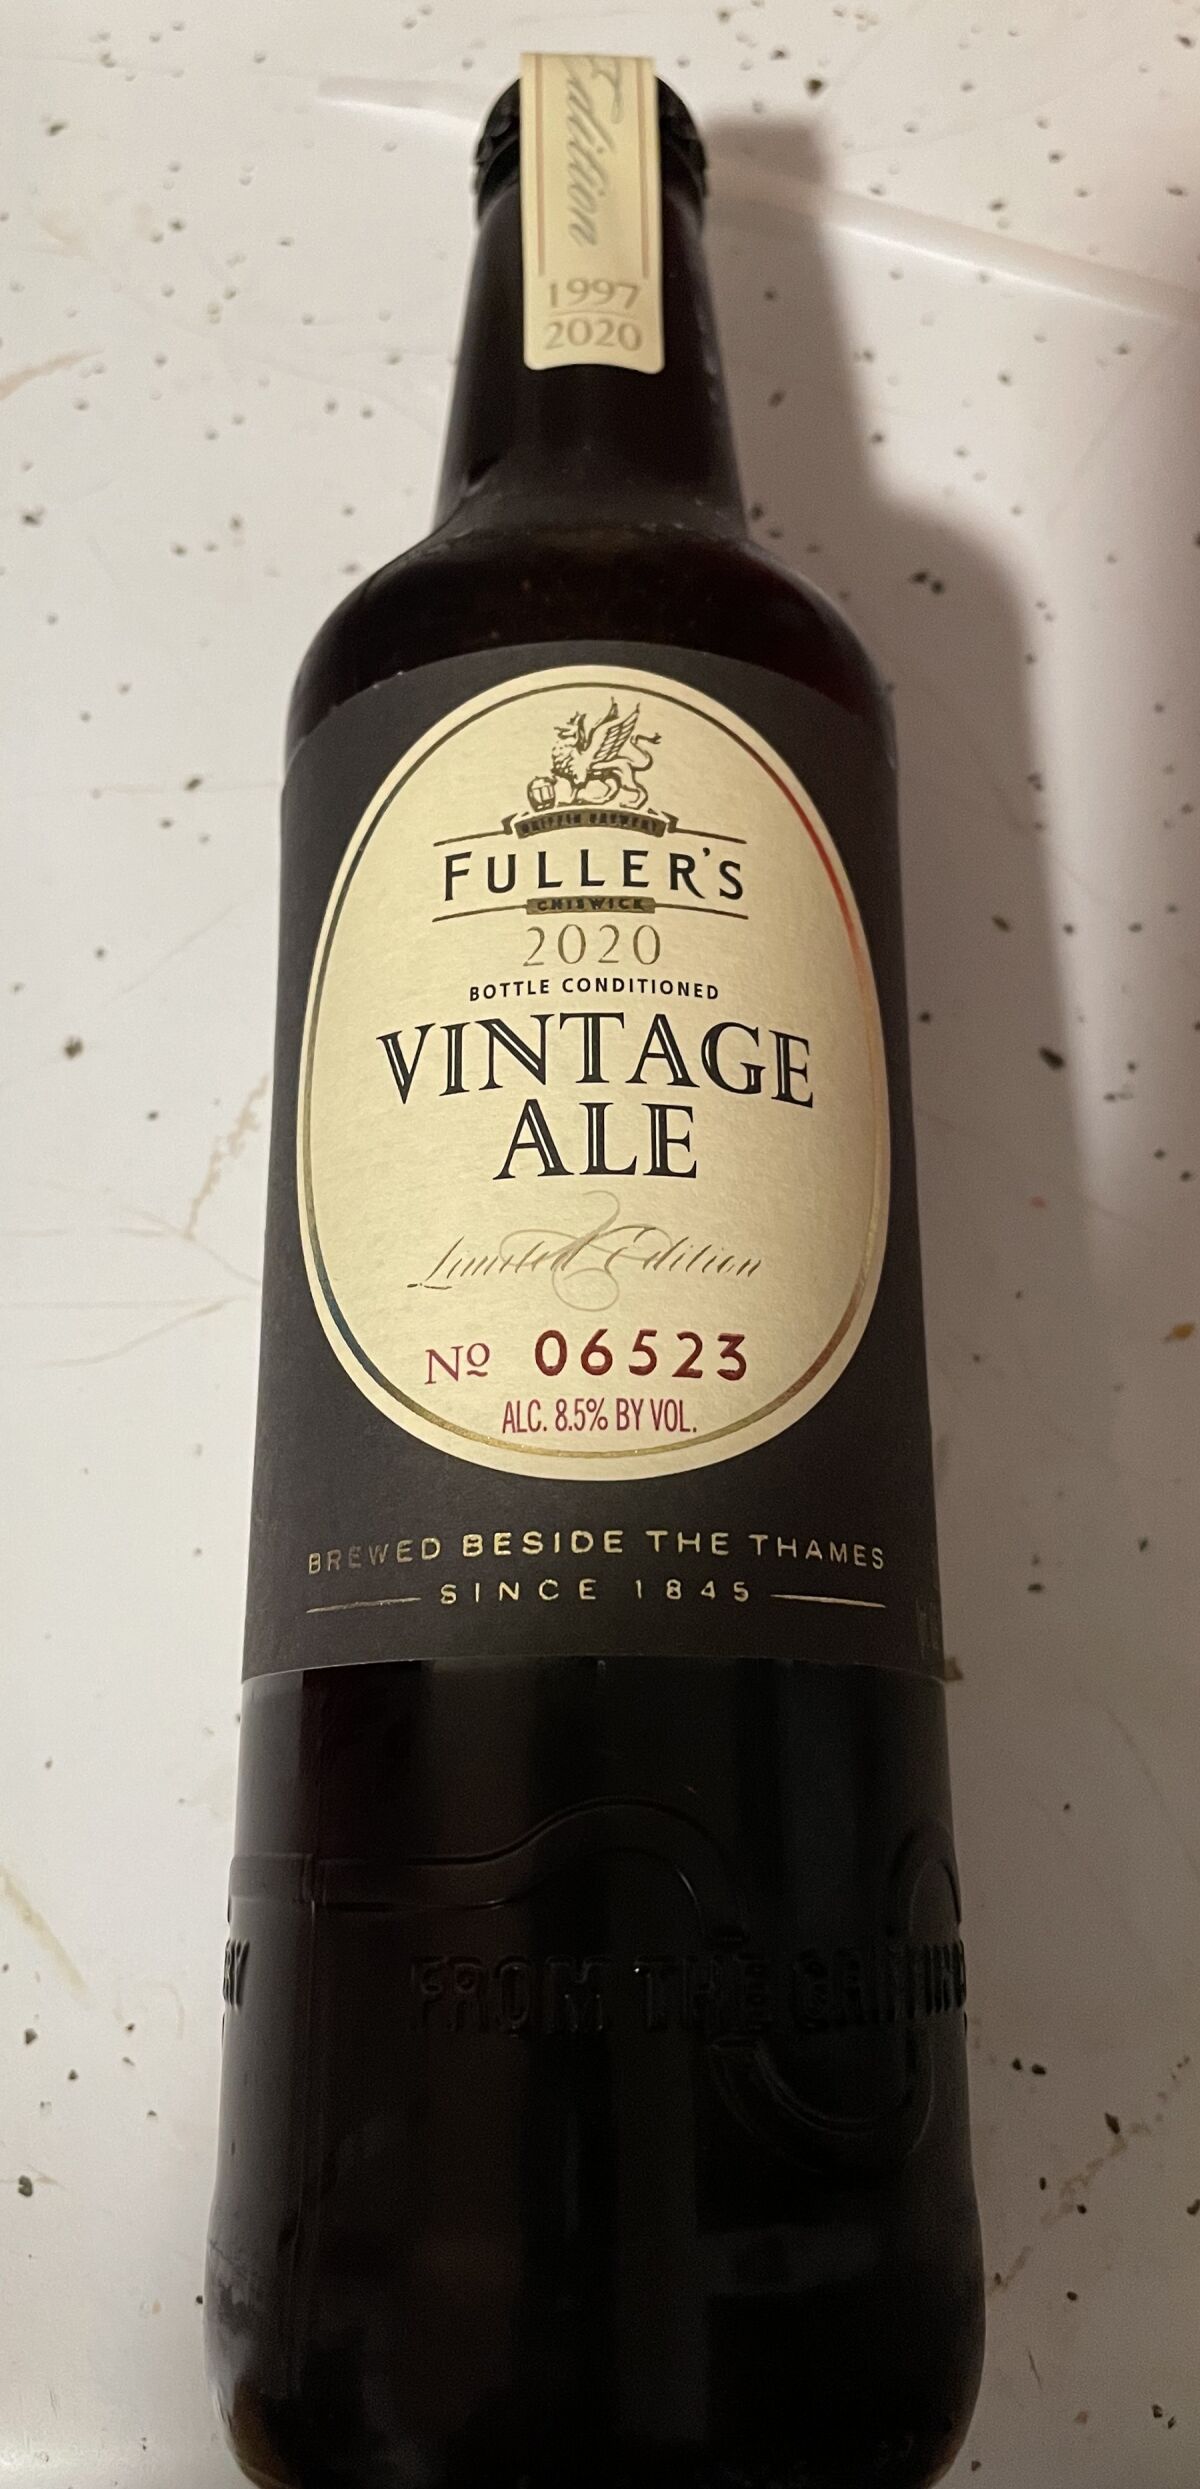 Vintage Ale 2020 da Fuller's, Chiswick, Inglaterra